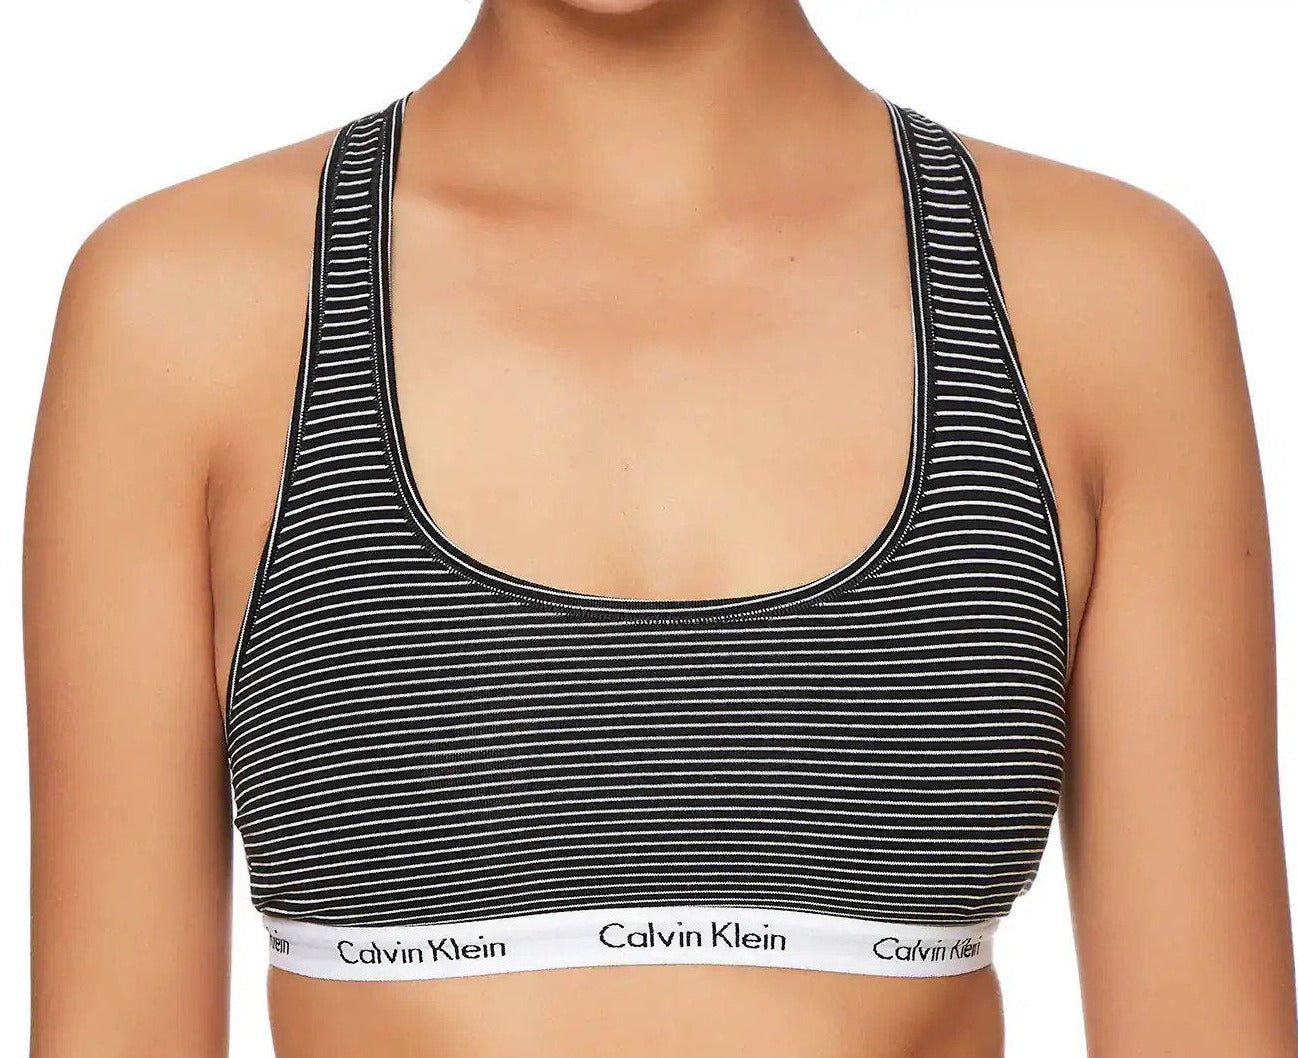 Calvin Klein Women's Carousel Unlined Bralette - Stripe/Black